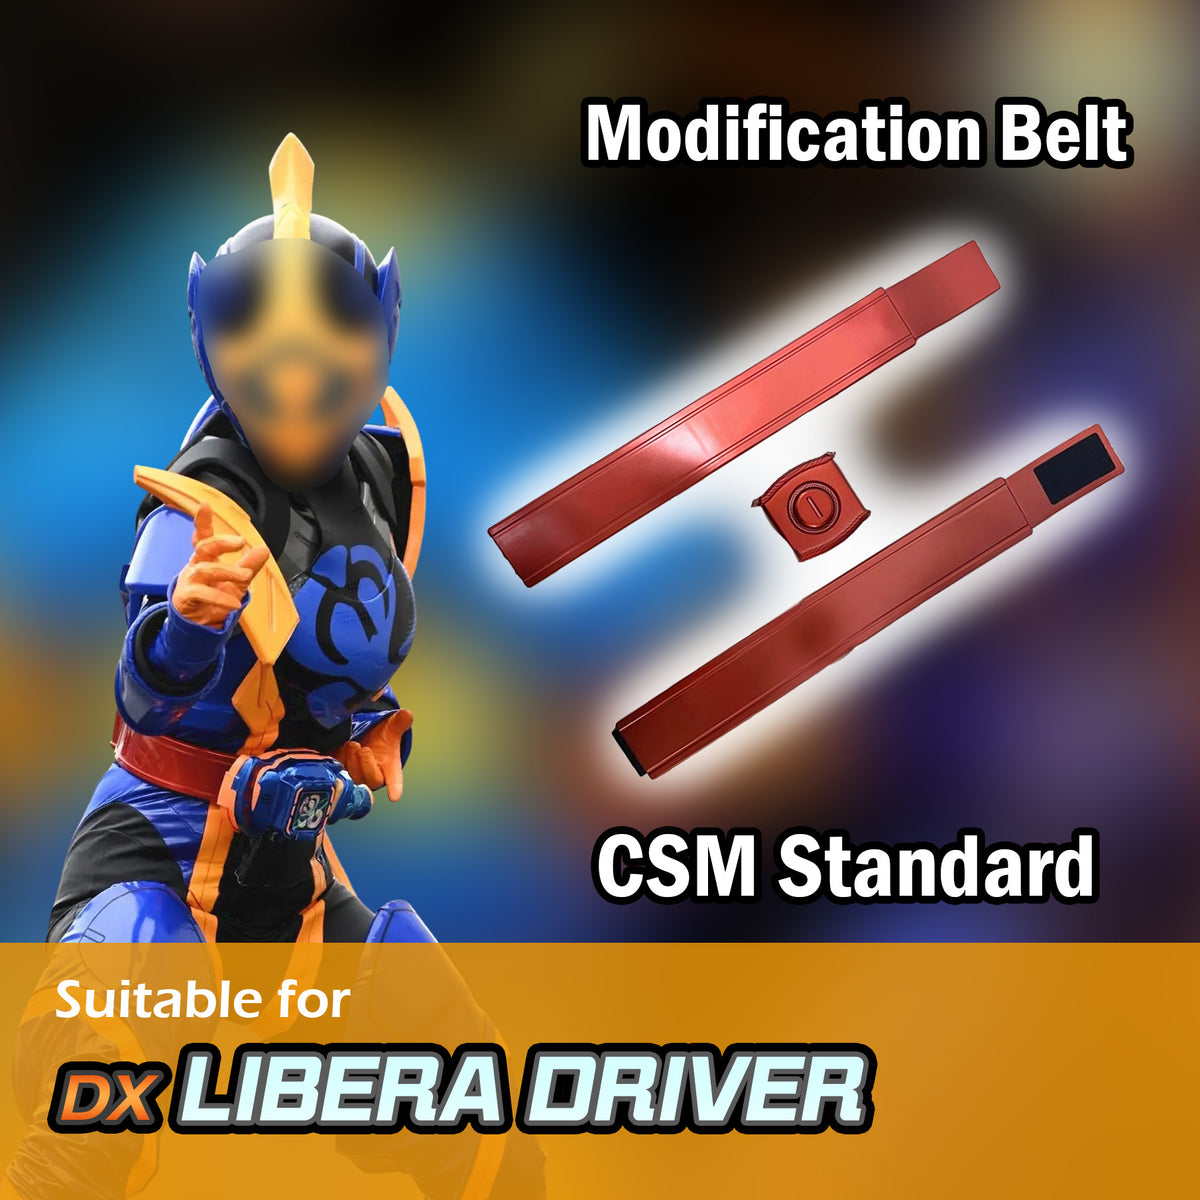 DX Libera Driver CSM Style Belt